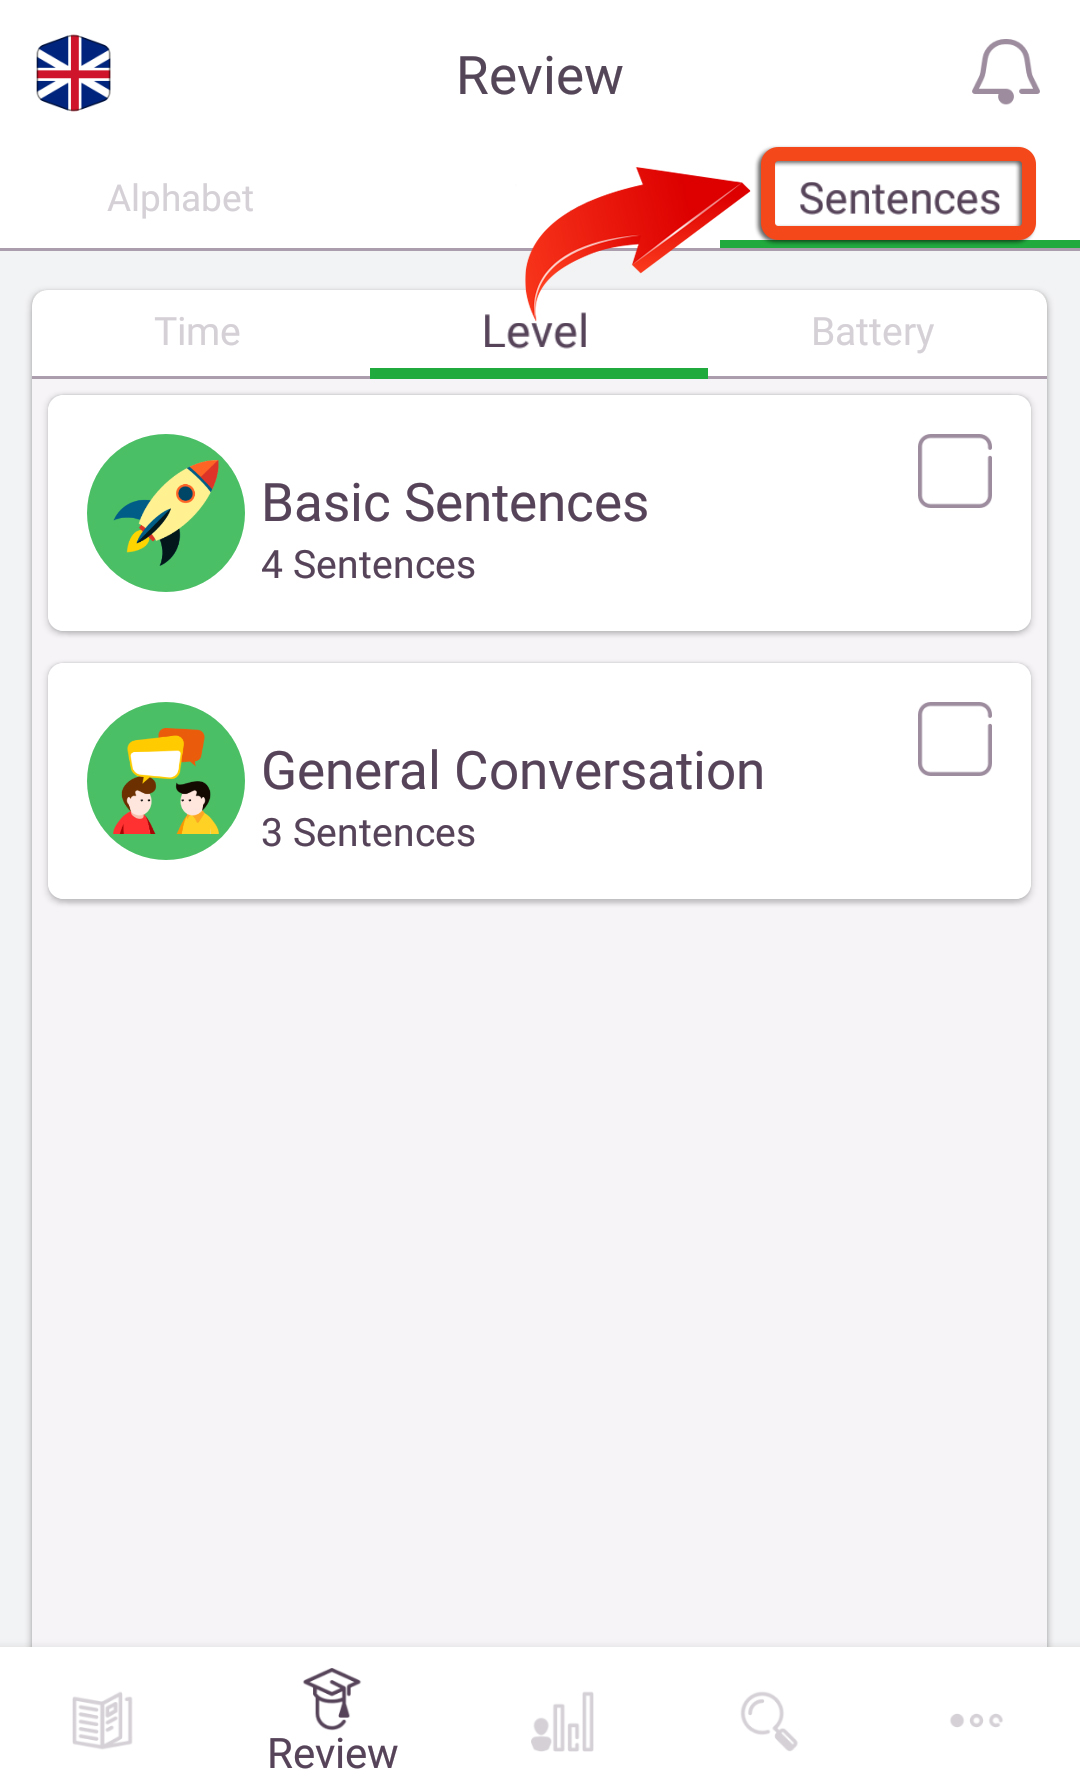 Review_Sentences.jpg